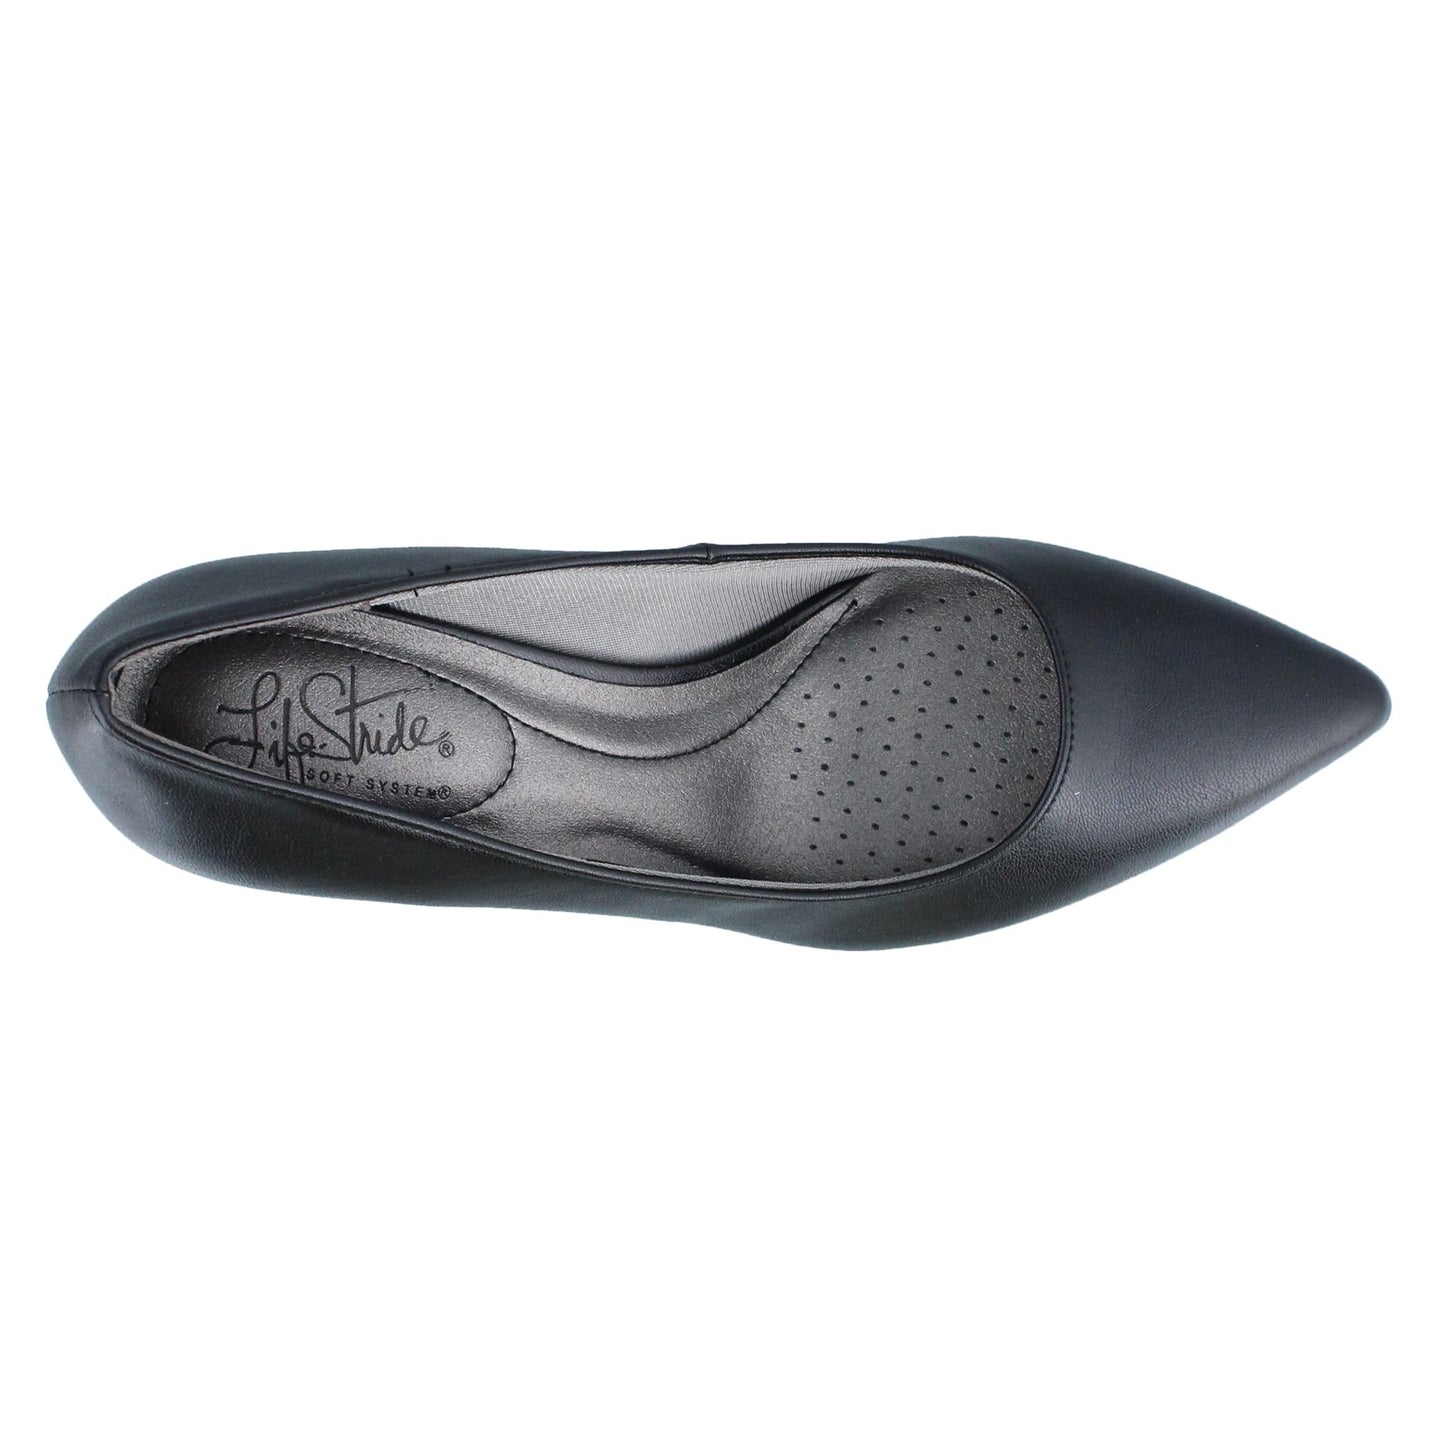 Peltz Shoes  Women's Lifestride Sevyn High Heel Pump Black E3515S4004